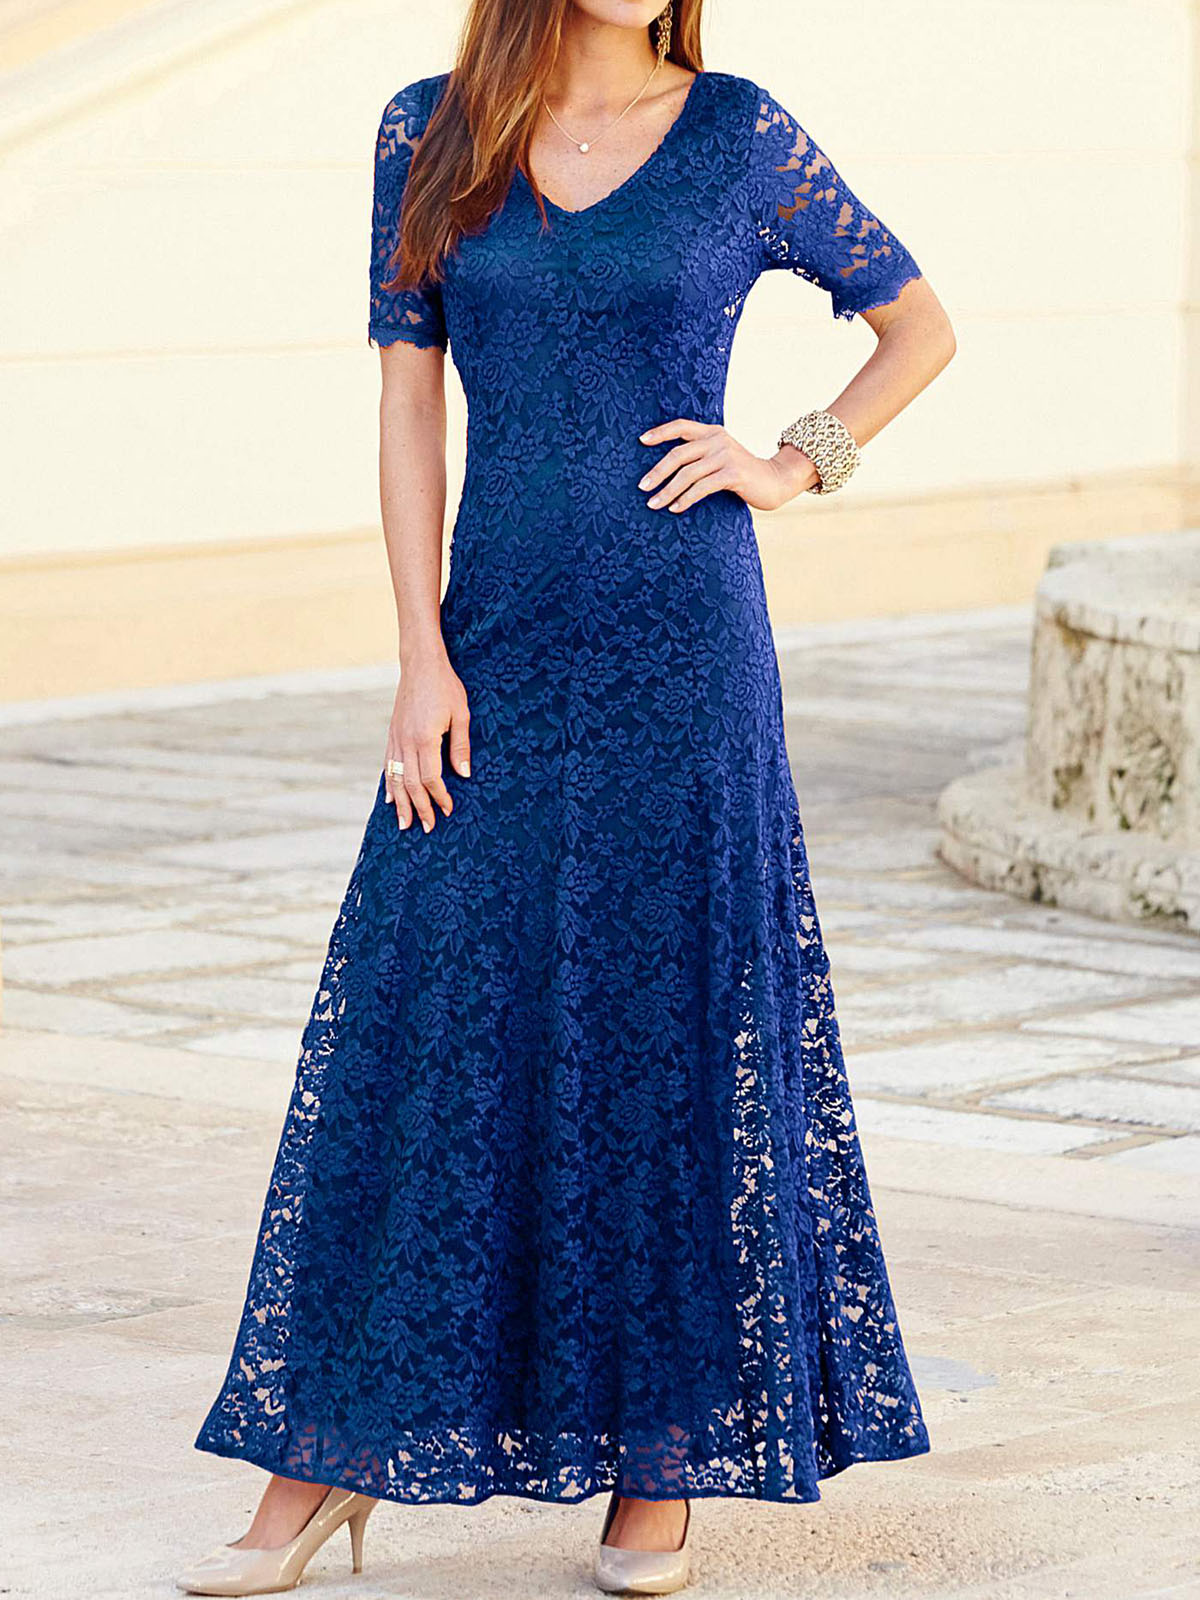 Joanna Hope - - Joanna Hope COBALT-BLUE Floral Lace Maxi Dress